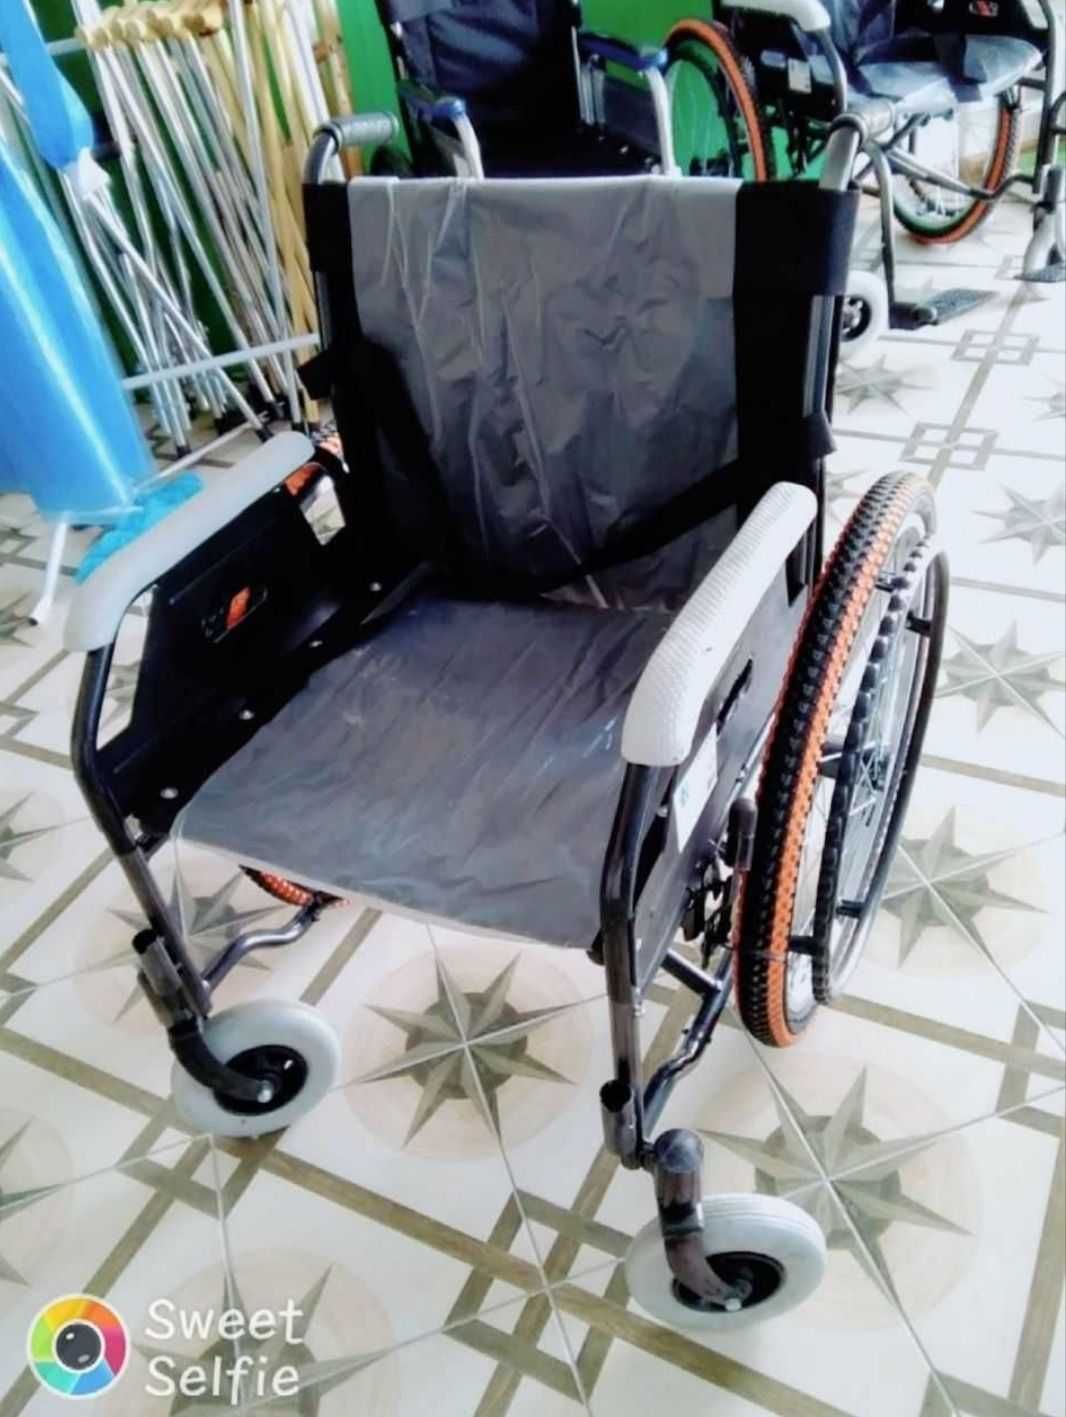 09:08
Инвалидние коляски. Инвалидная коляска. N 14

999